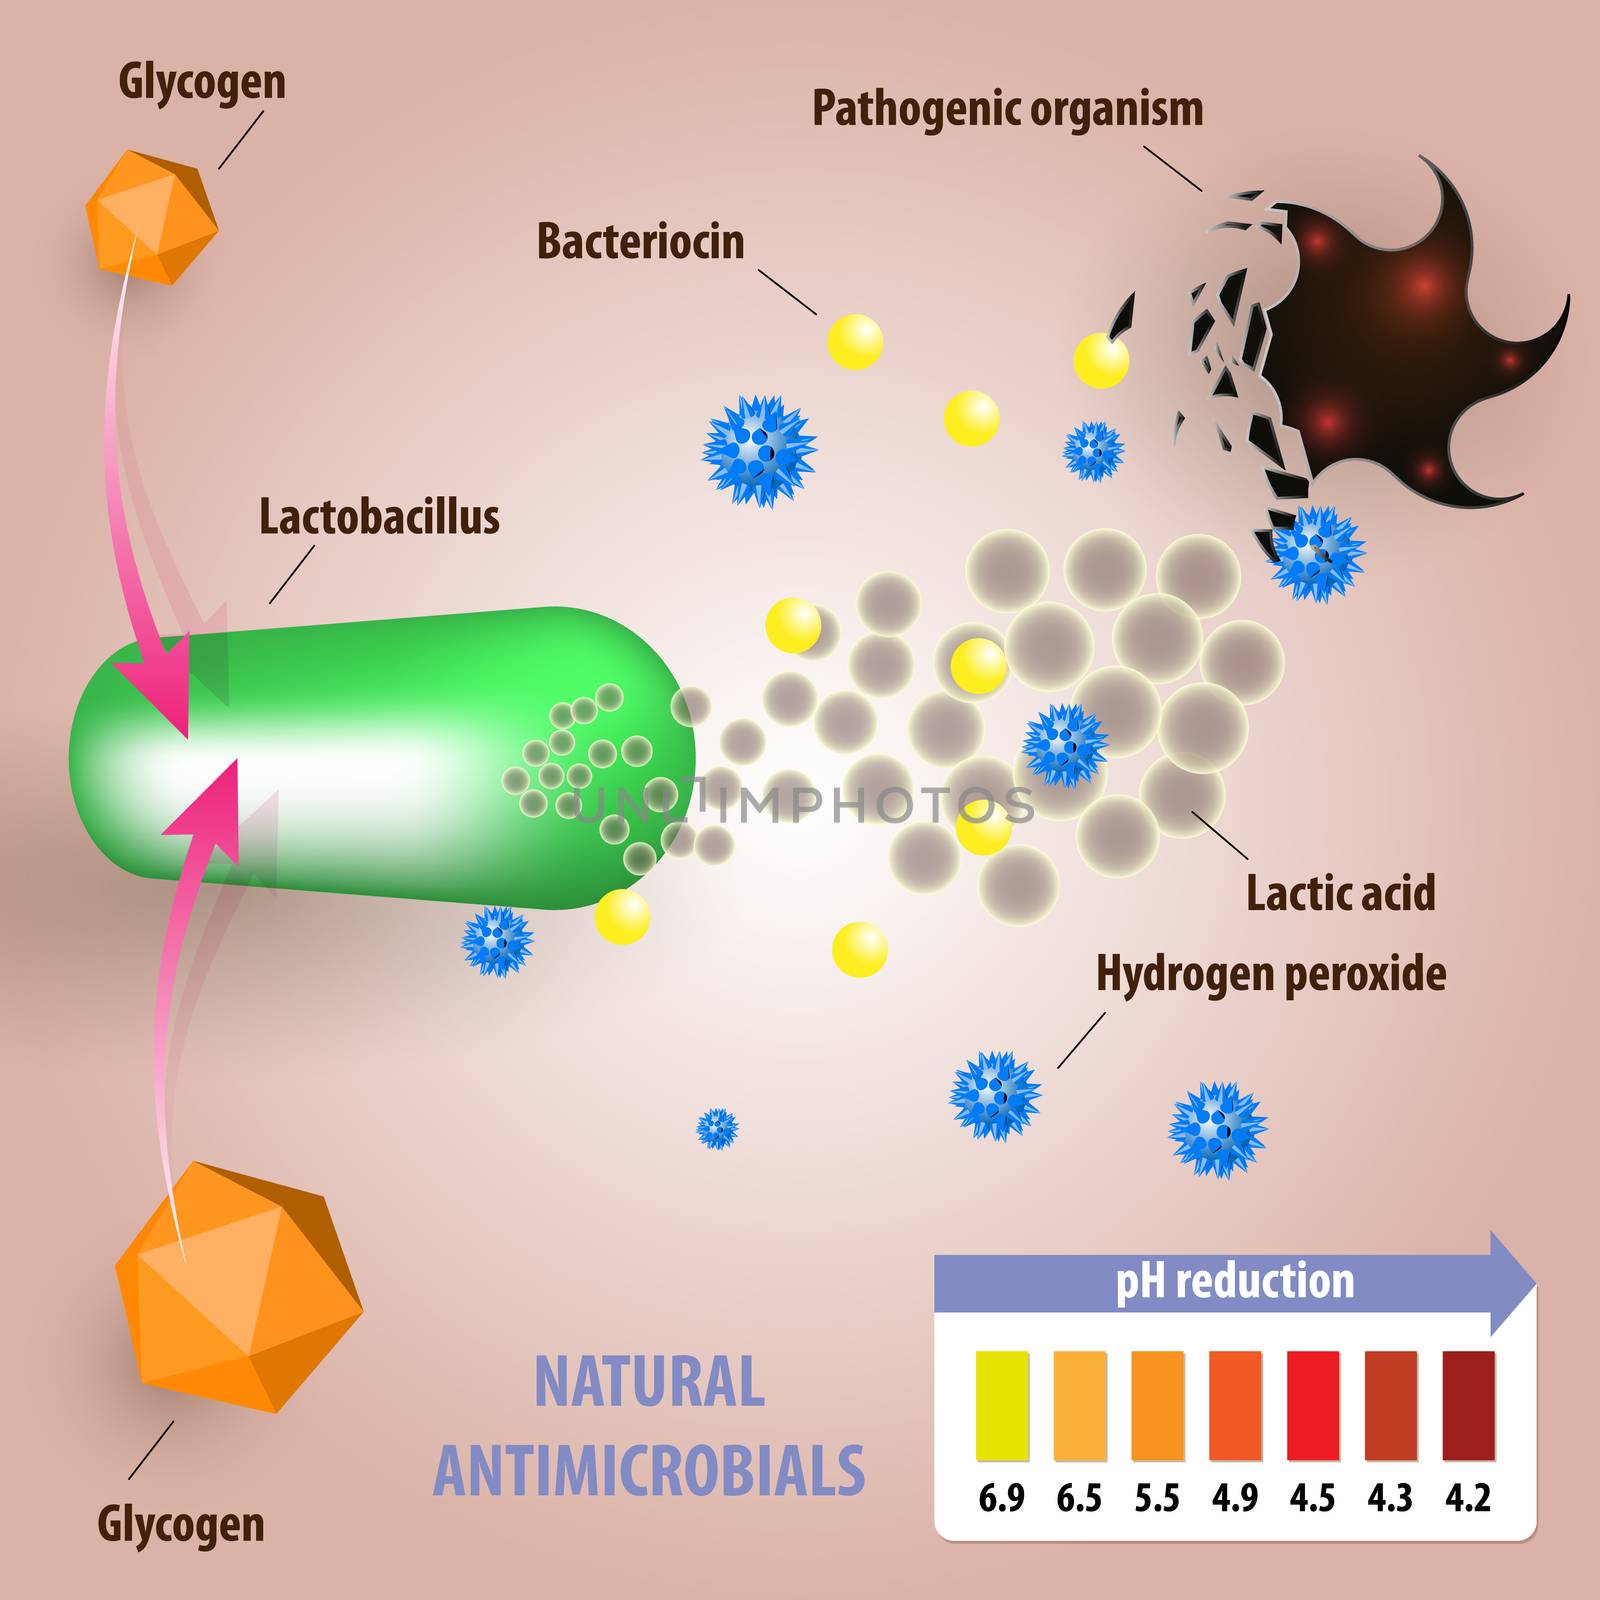 Antimicrobial properties of lactobacilli. Medical illustration of normal vaginal microflora